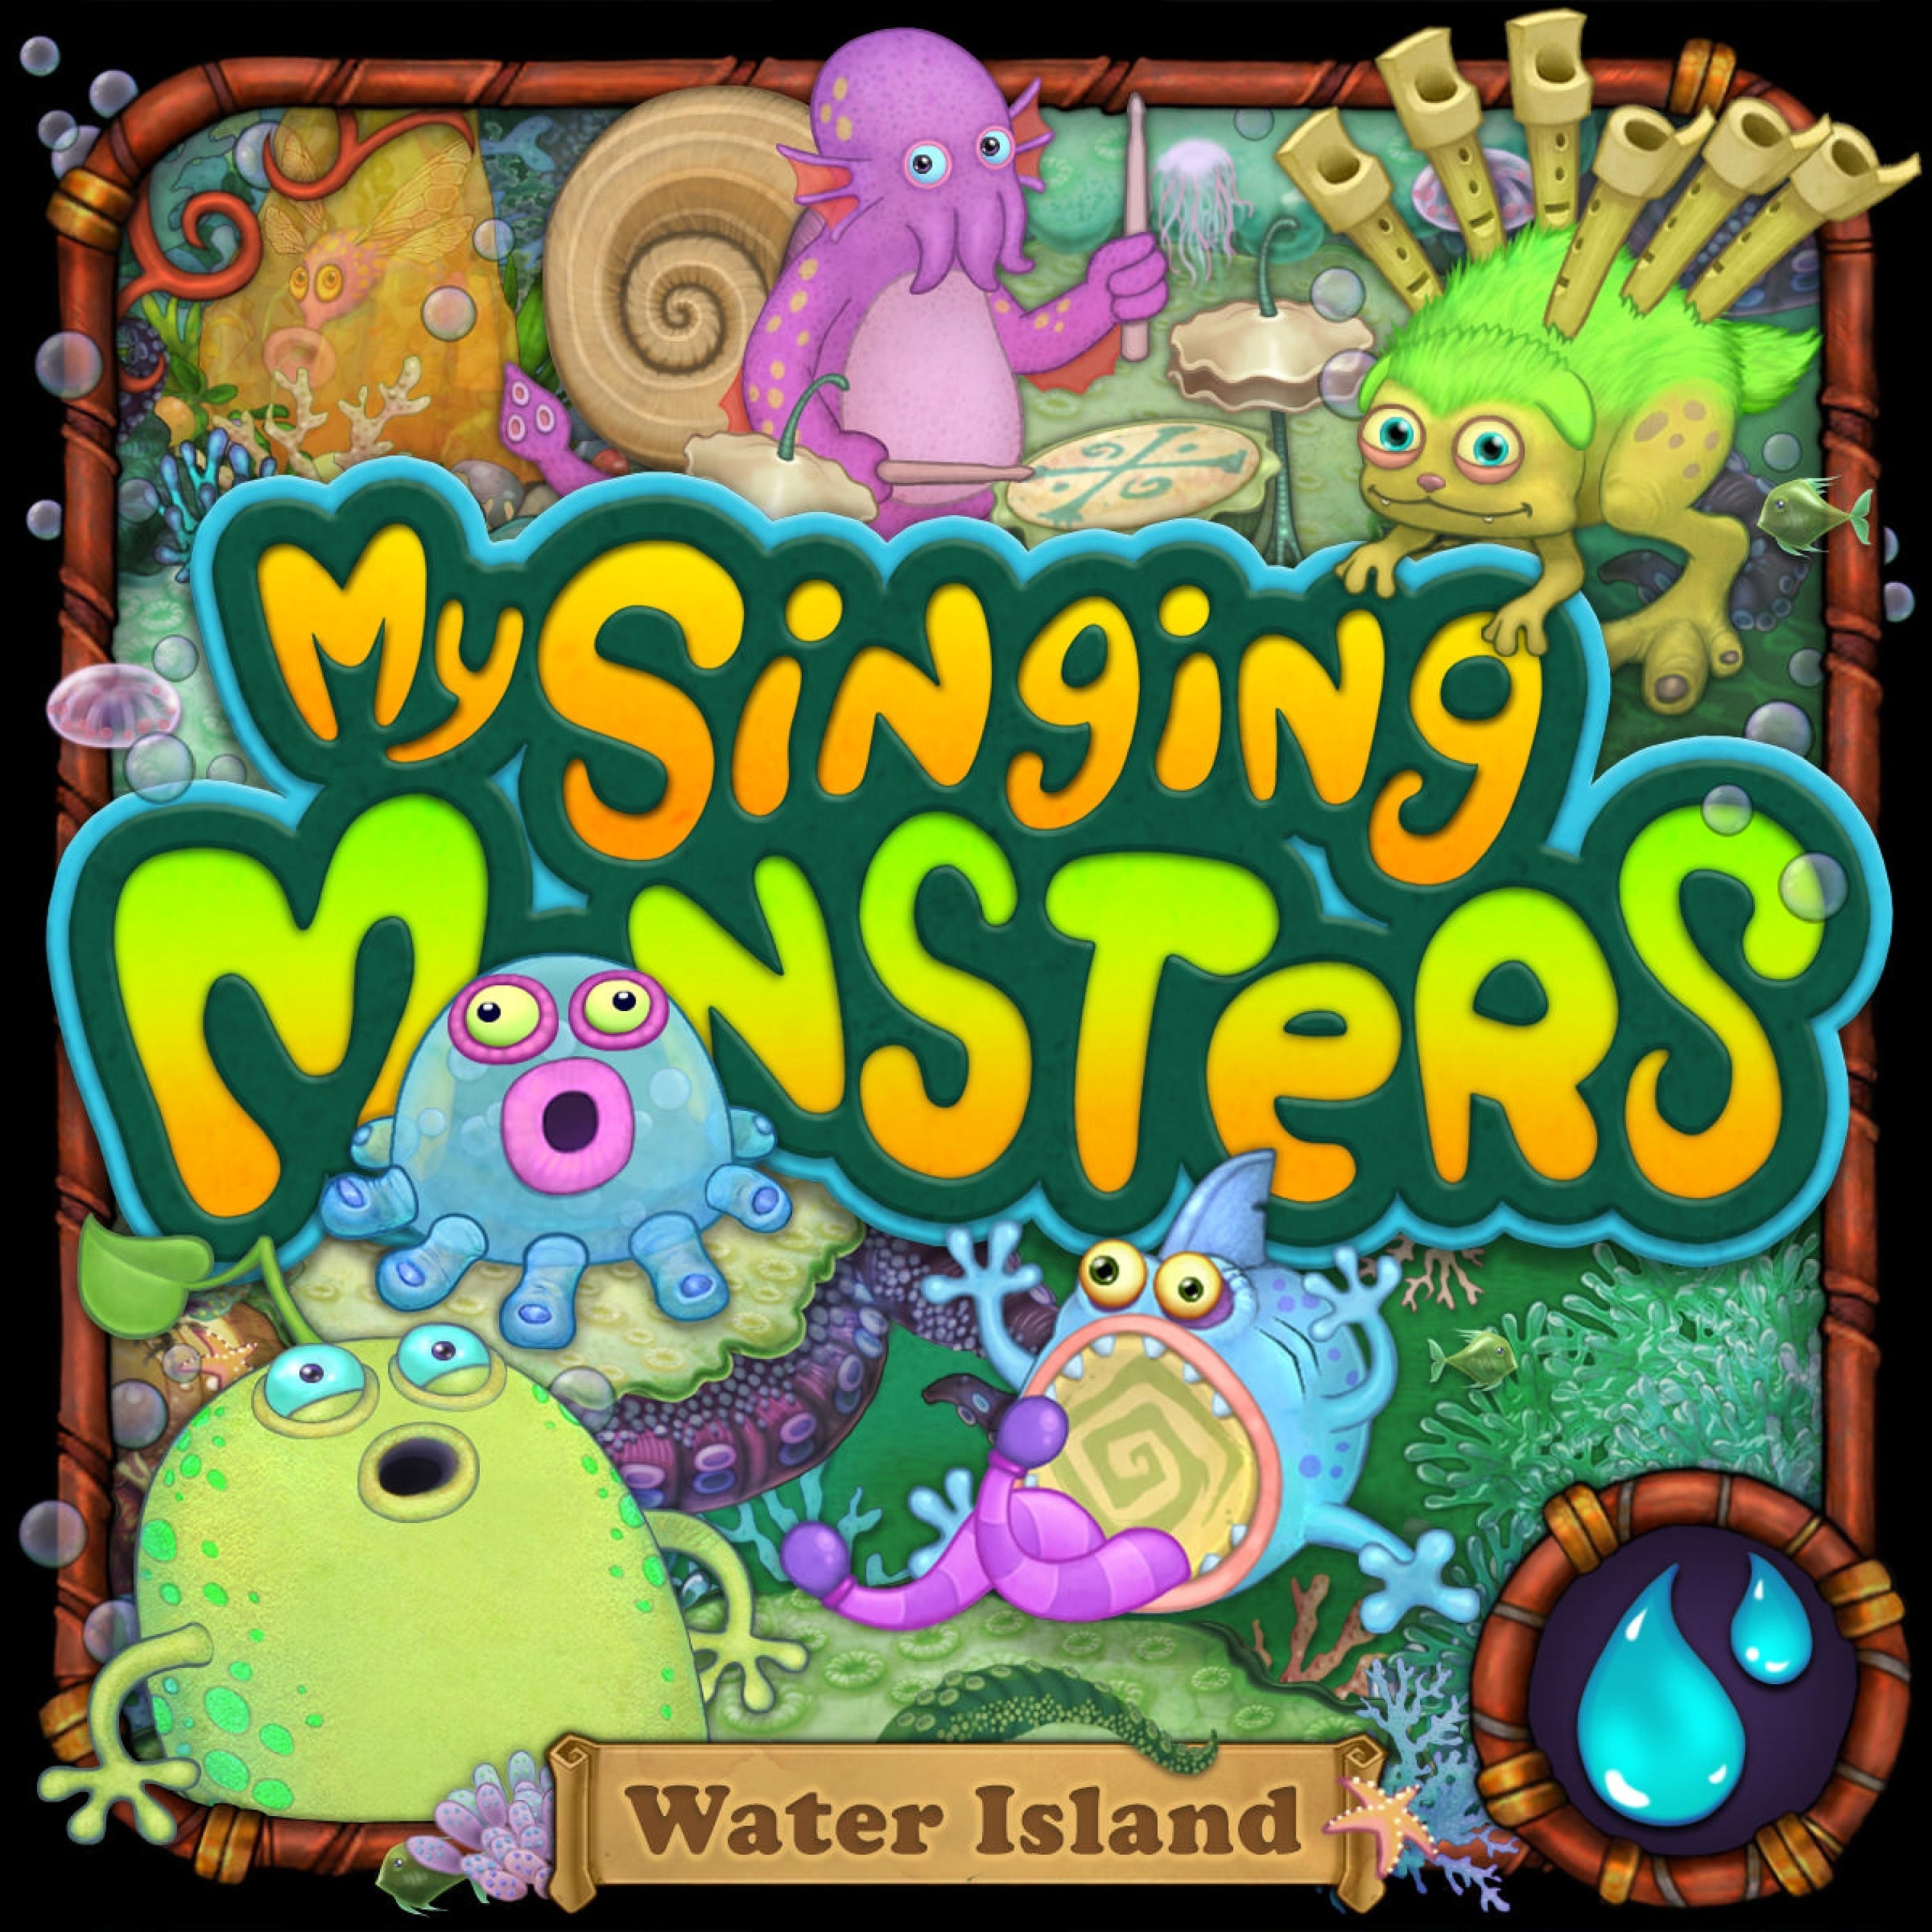 Остров воды my singing. Остров воды my singing Monsters. My singing Monsters Water Island. My singing Monsters острова. Water Island MSM.